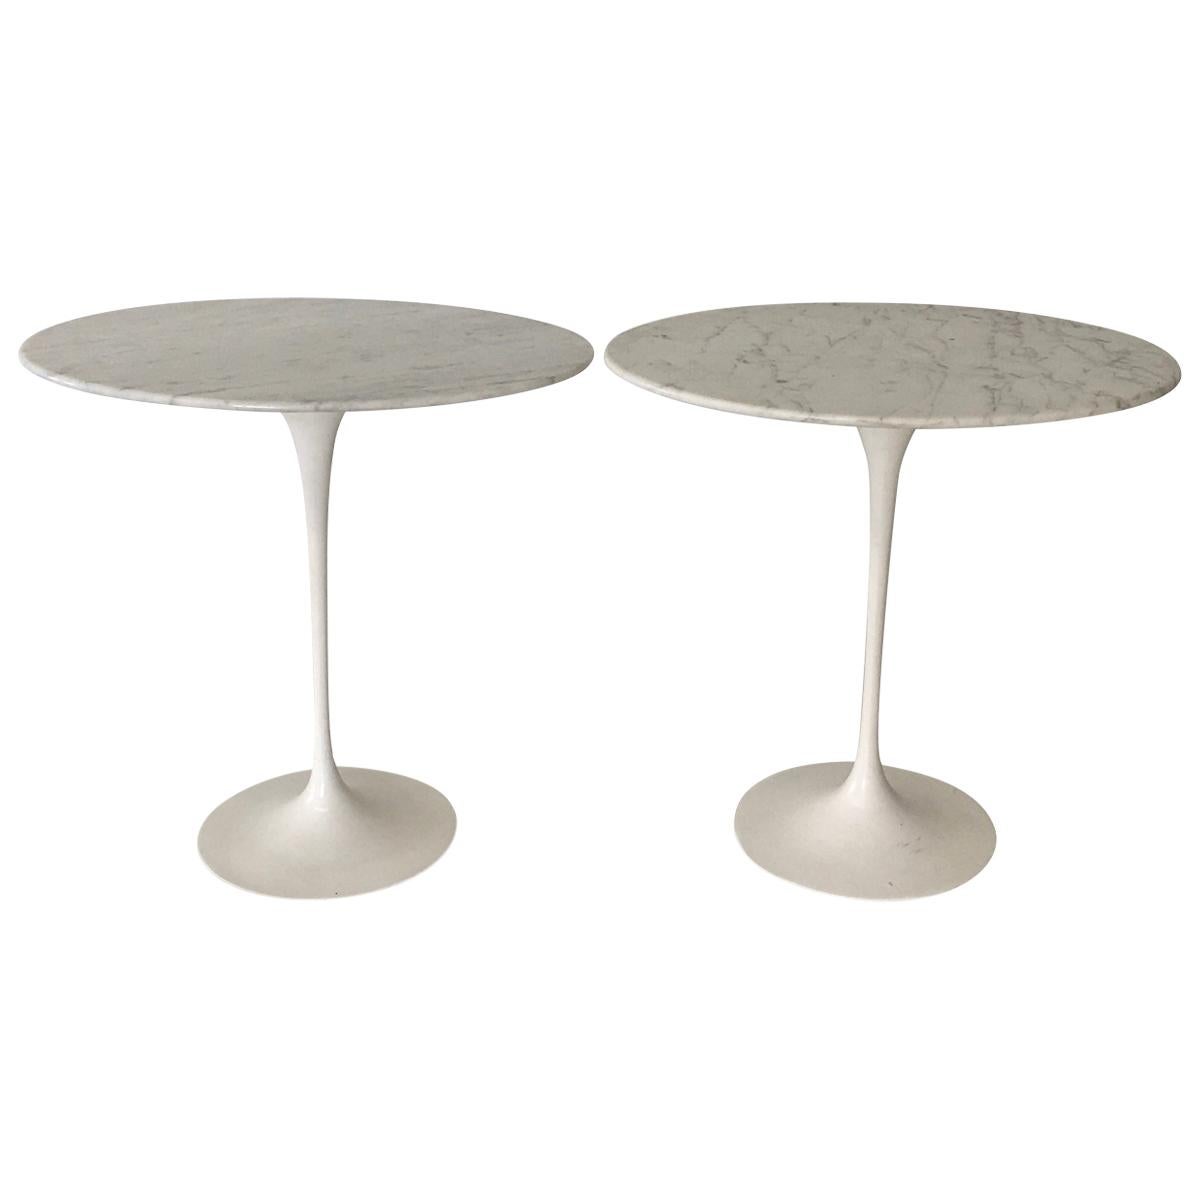 Eero Saarinen Style Oval "Tulip" Tables in Carrera Marble For Sale